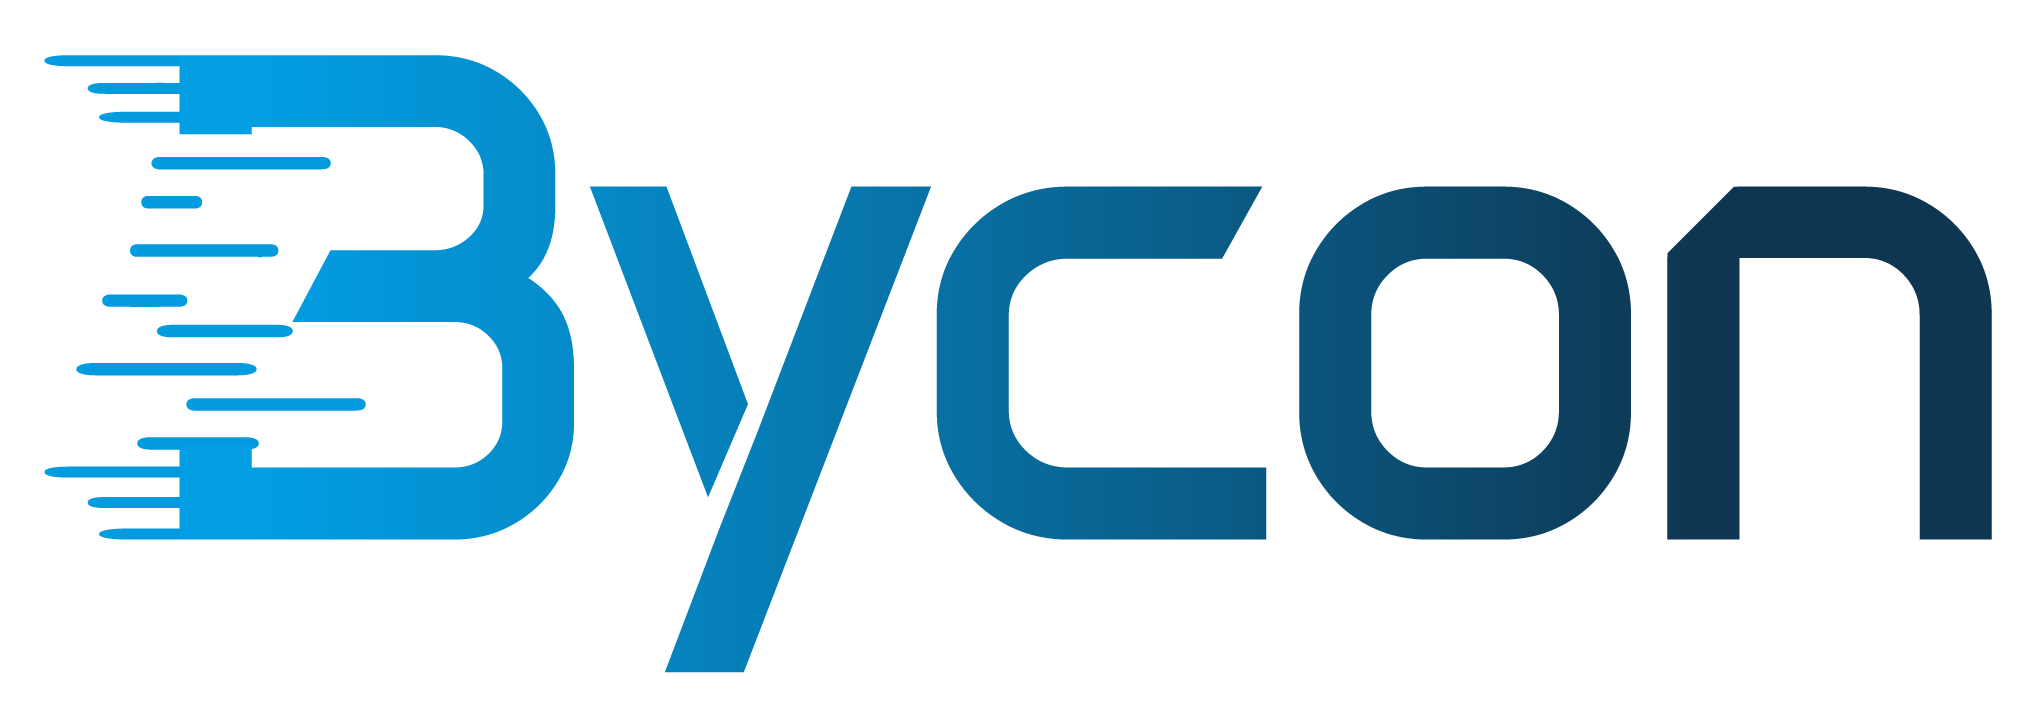 Bycon